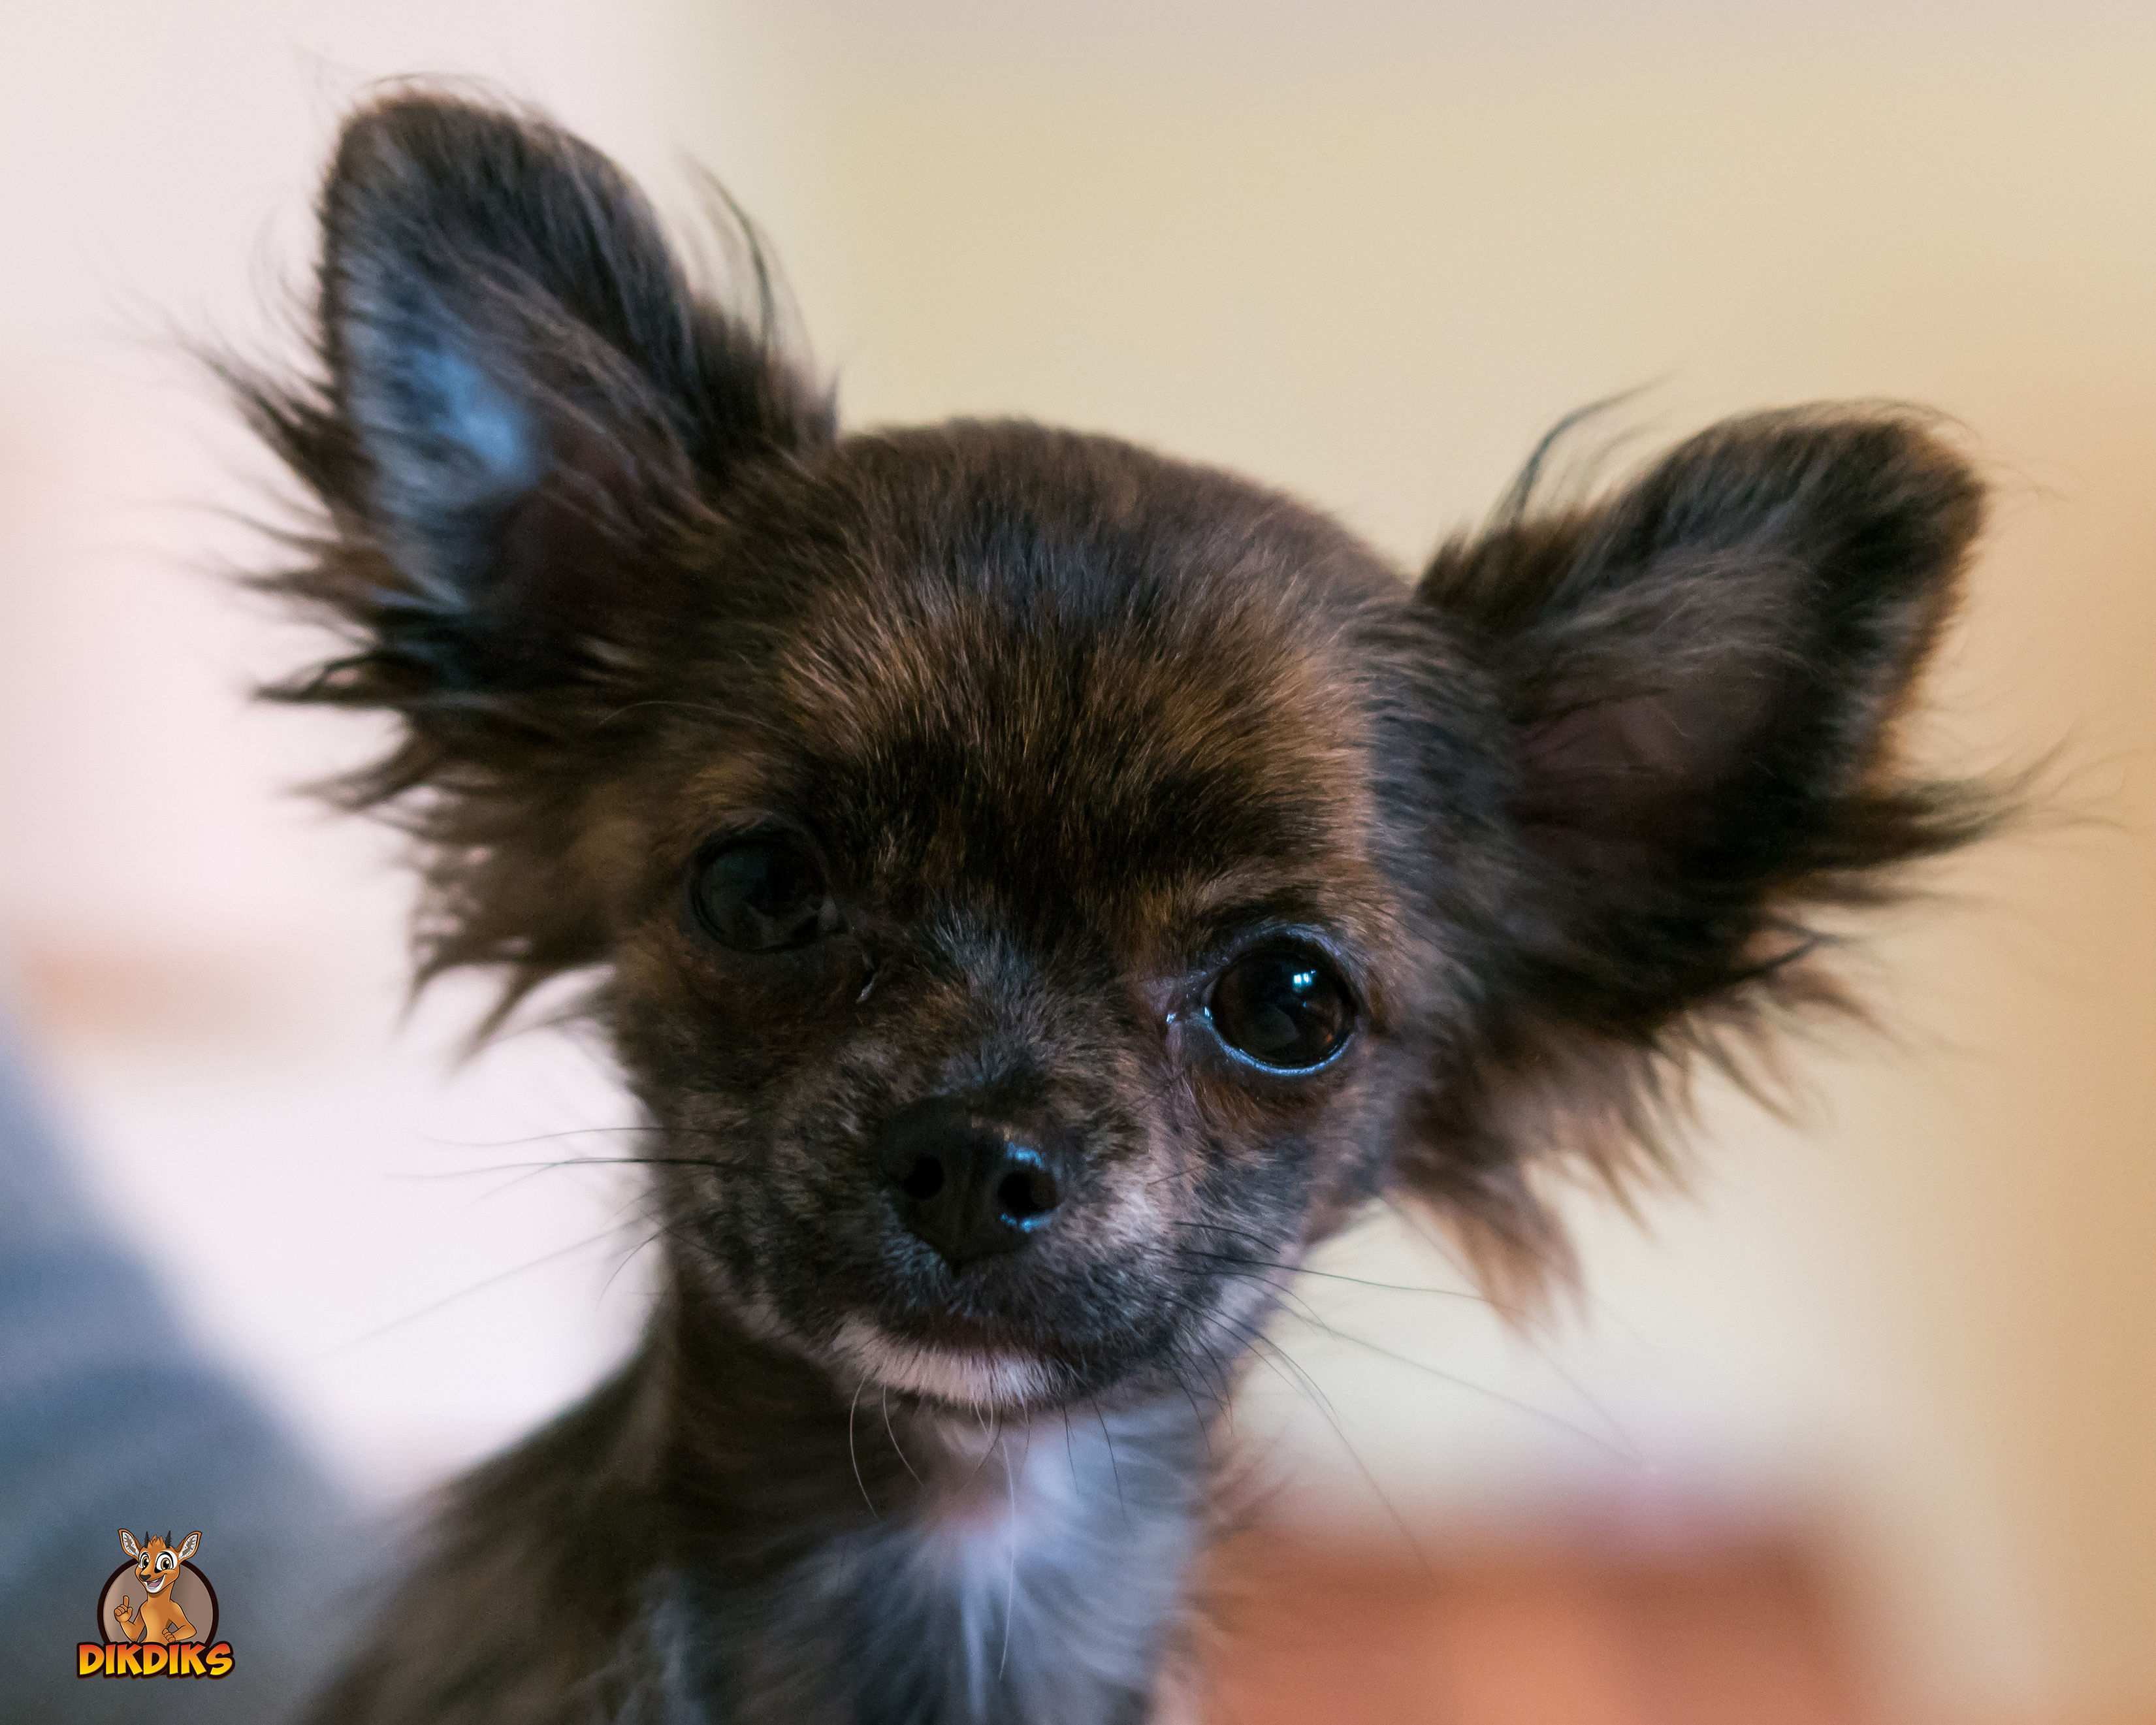 Chihuahua Charakter